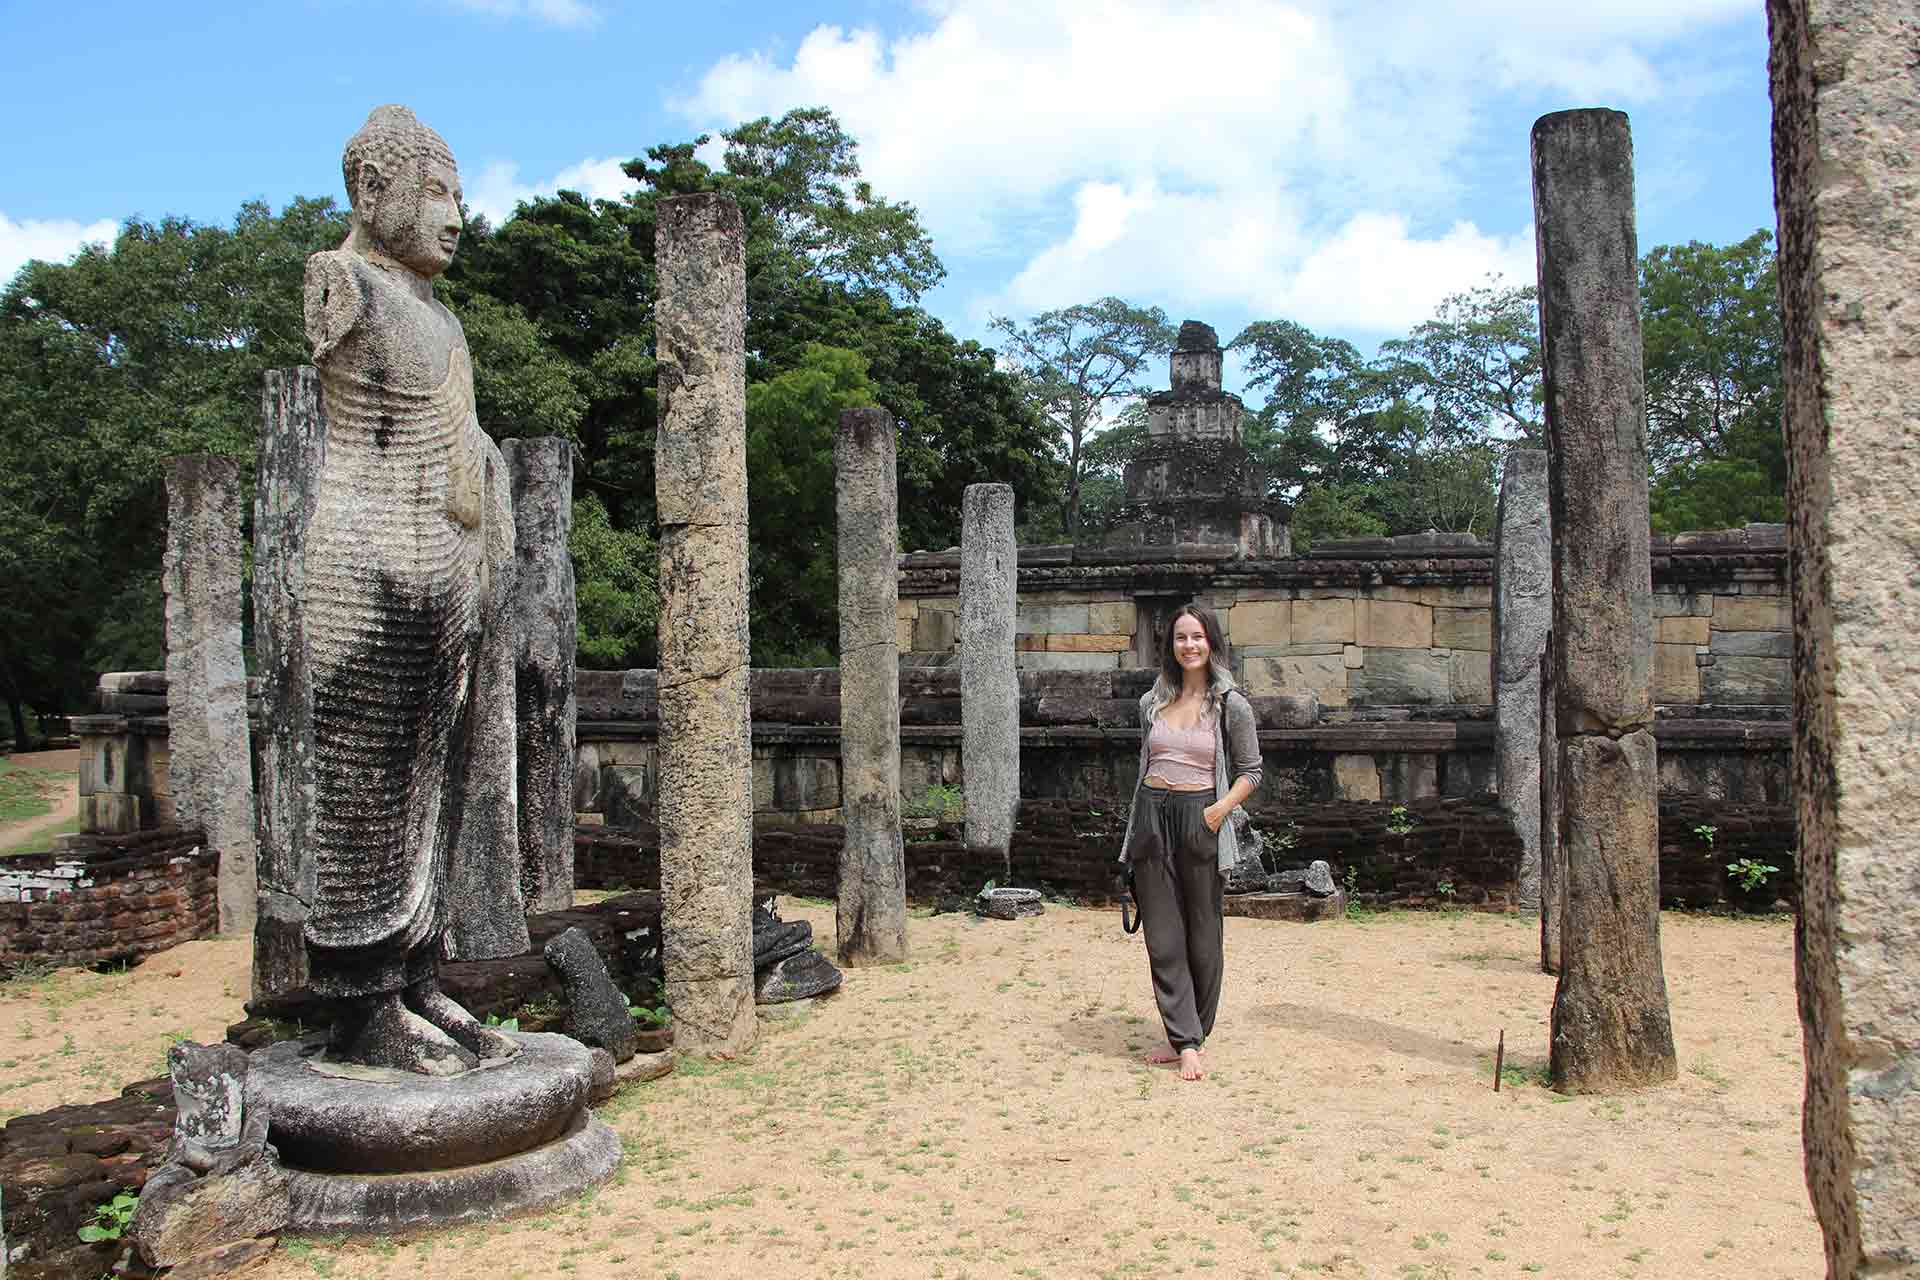 Sri Lanka’s Polonnaruwa ruins are part of its Cultural Triangle